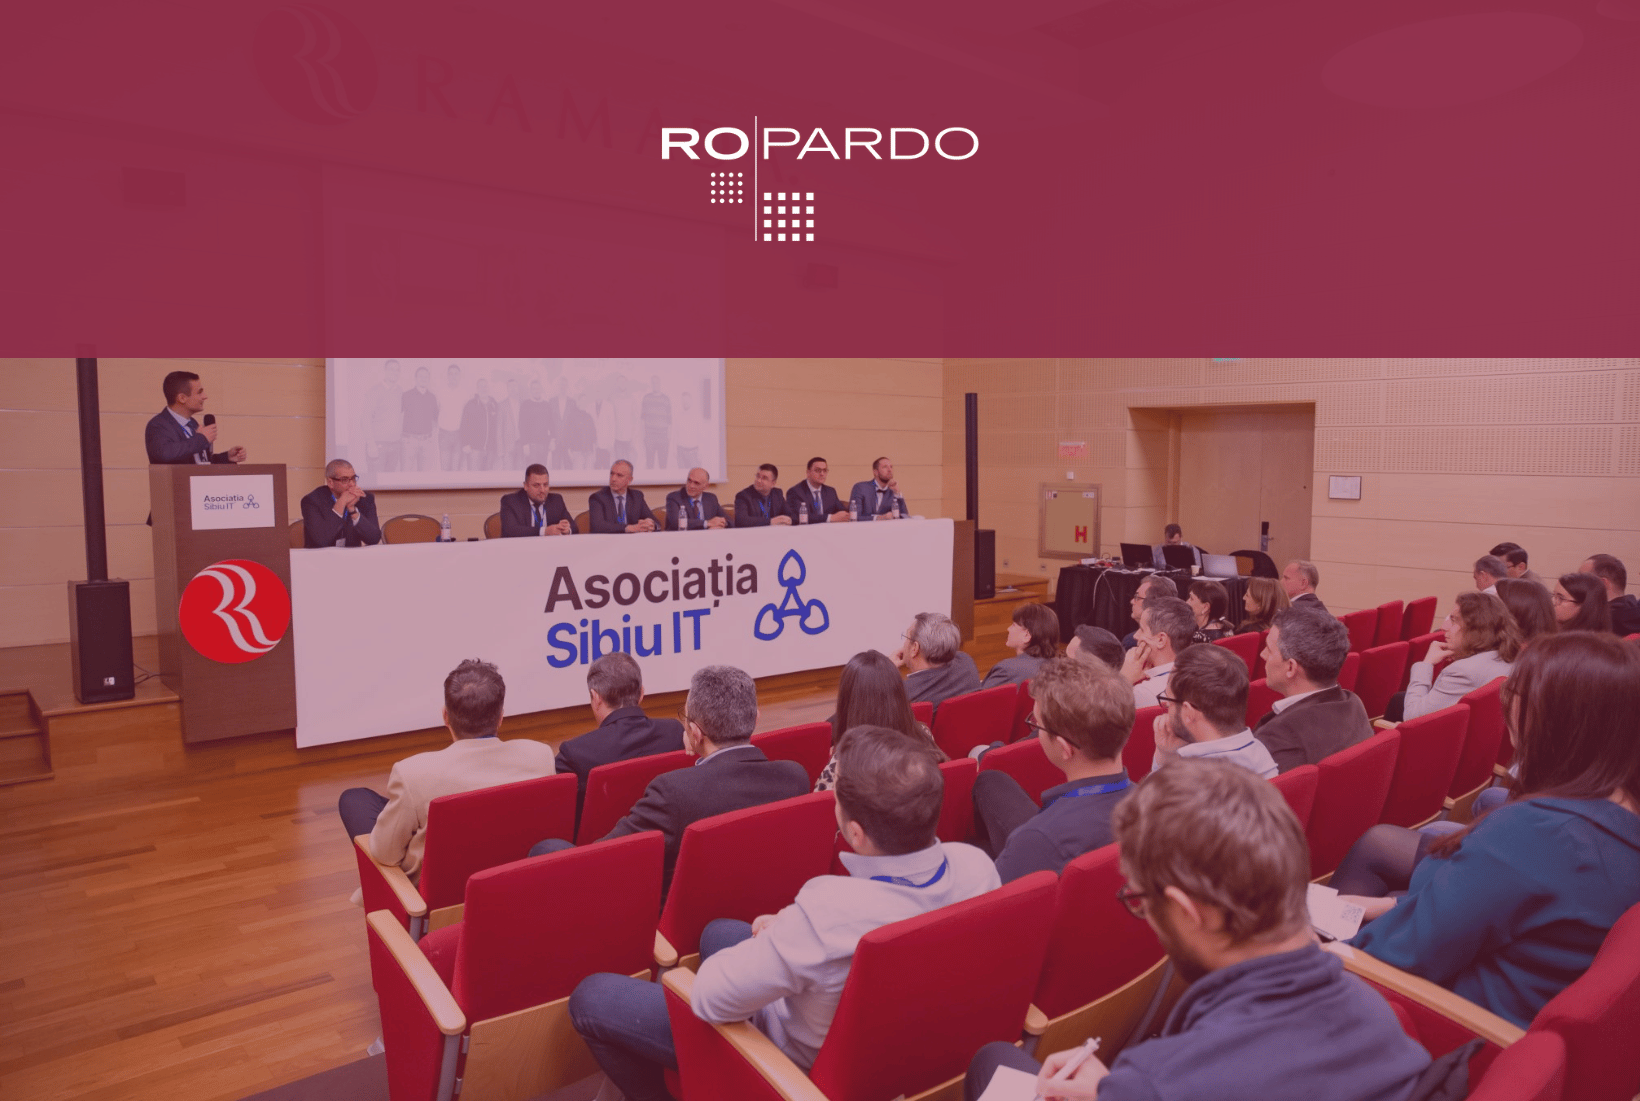 Ropardo – Proud Co-Founding Member of the Sibiu IT Association